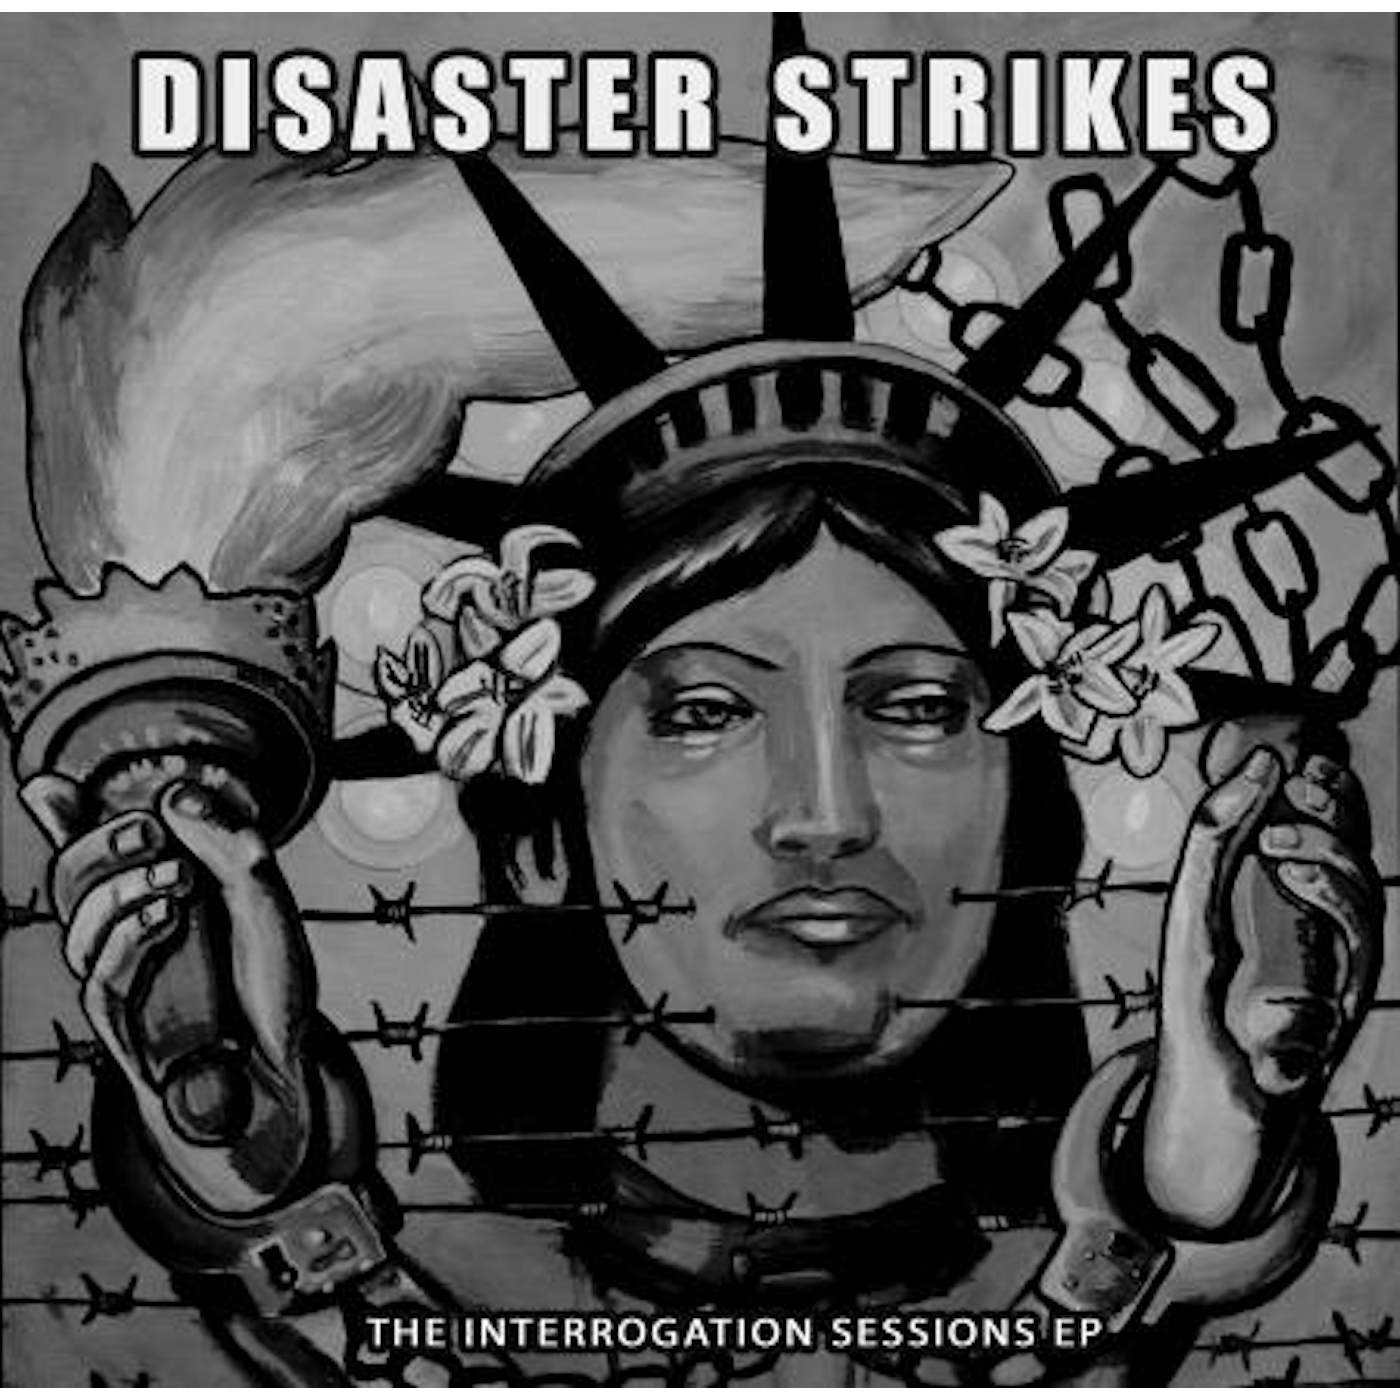 Disaster Strikes INTERROGATION SESSIONS Vinyl Record